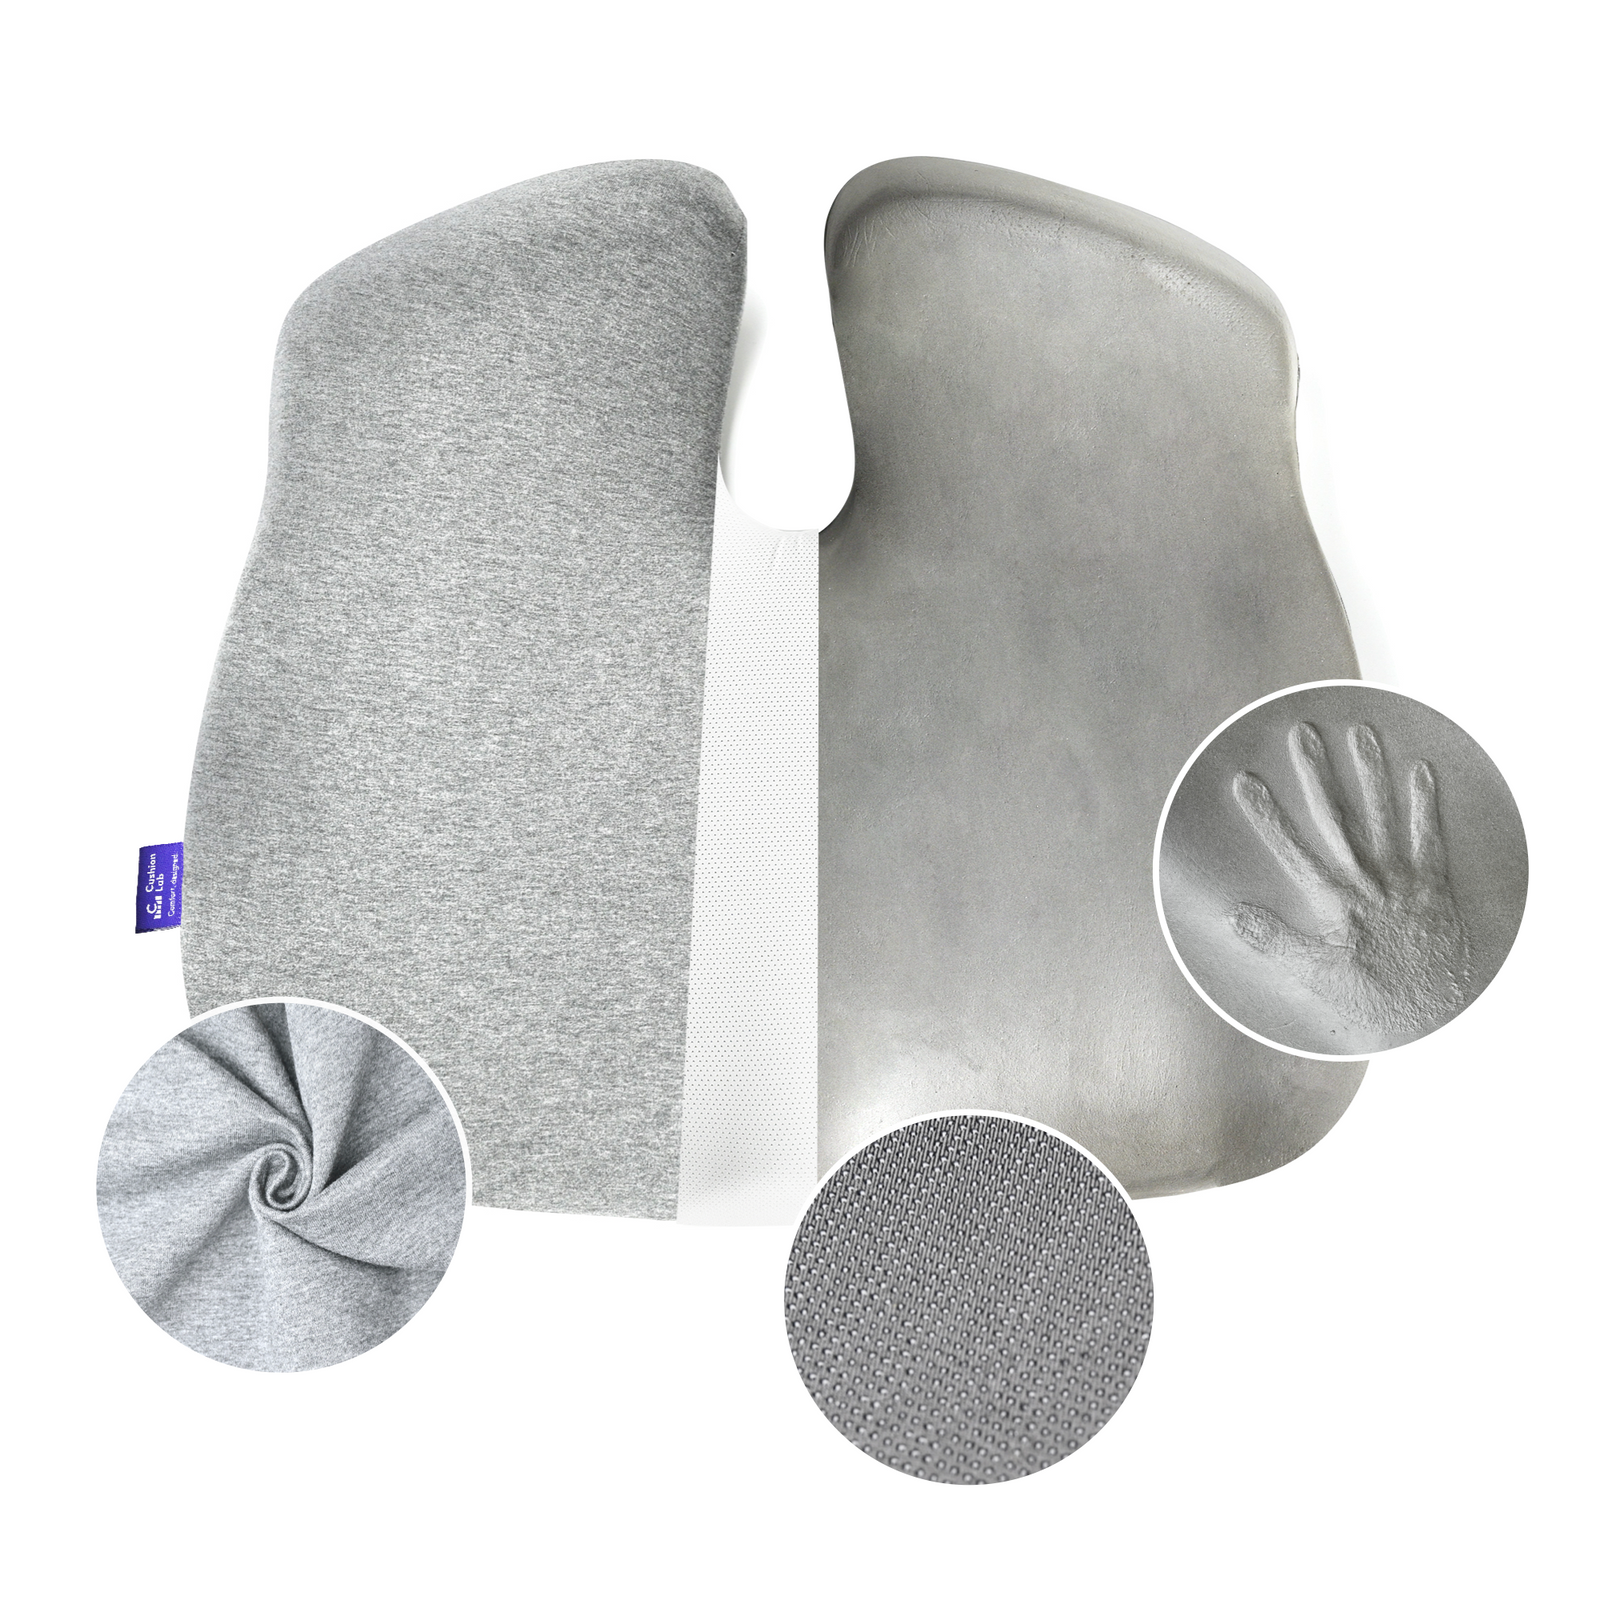 Cushion Lab Pressure Relief Seat Cushion Extra Dense Mem. Foam Grey open  box Sm. 749403978577